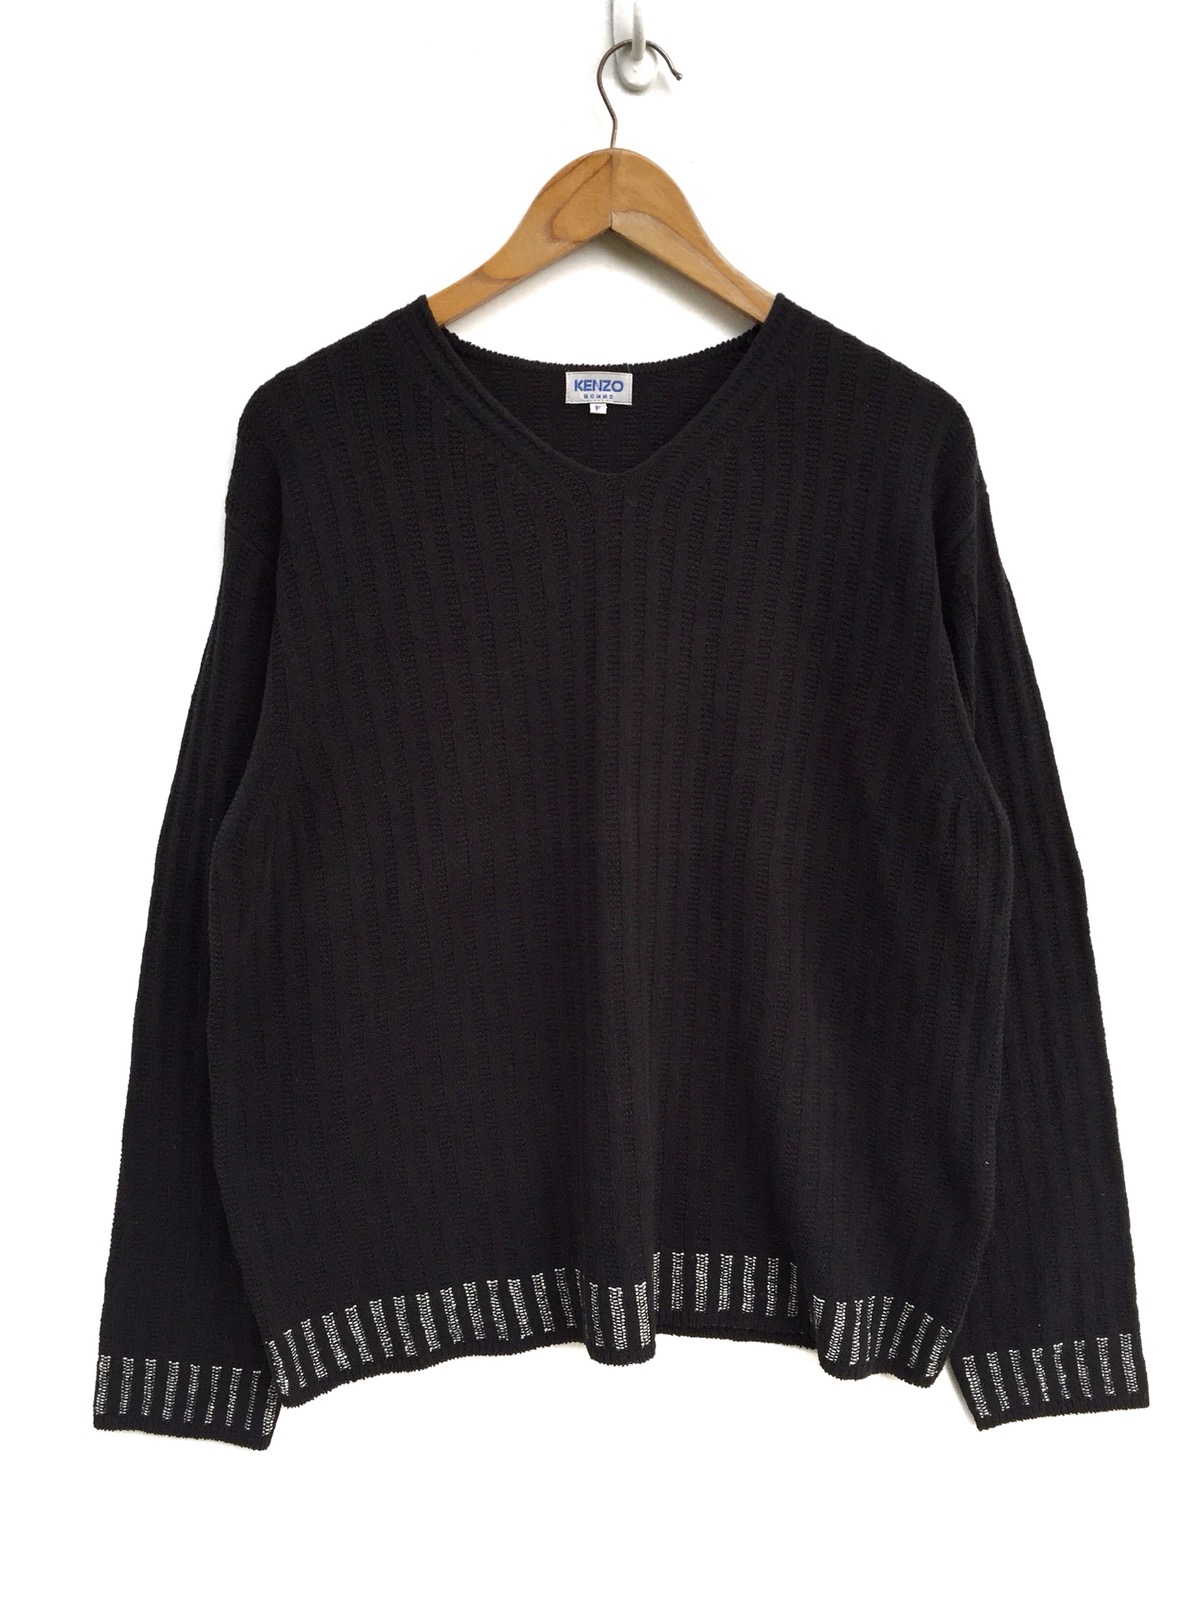 Vintage Japanese Brand Kenzo Hand Knit Black Sweatshirt - 1